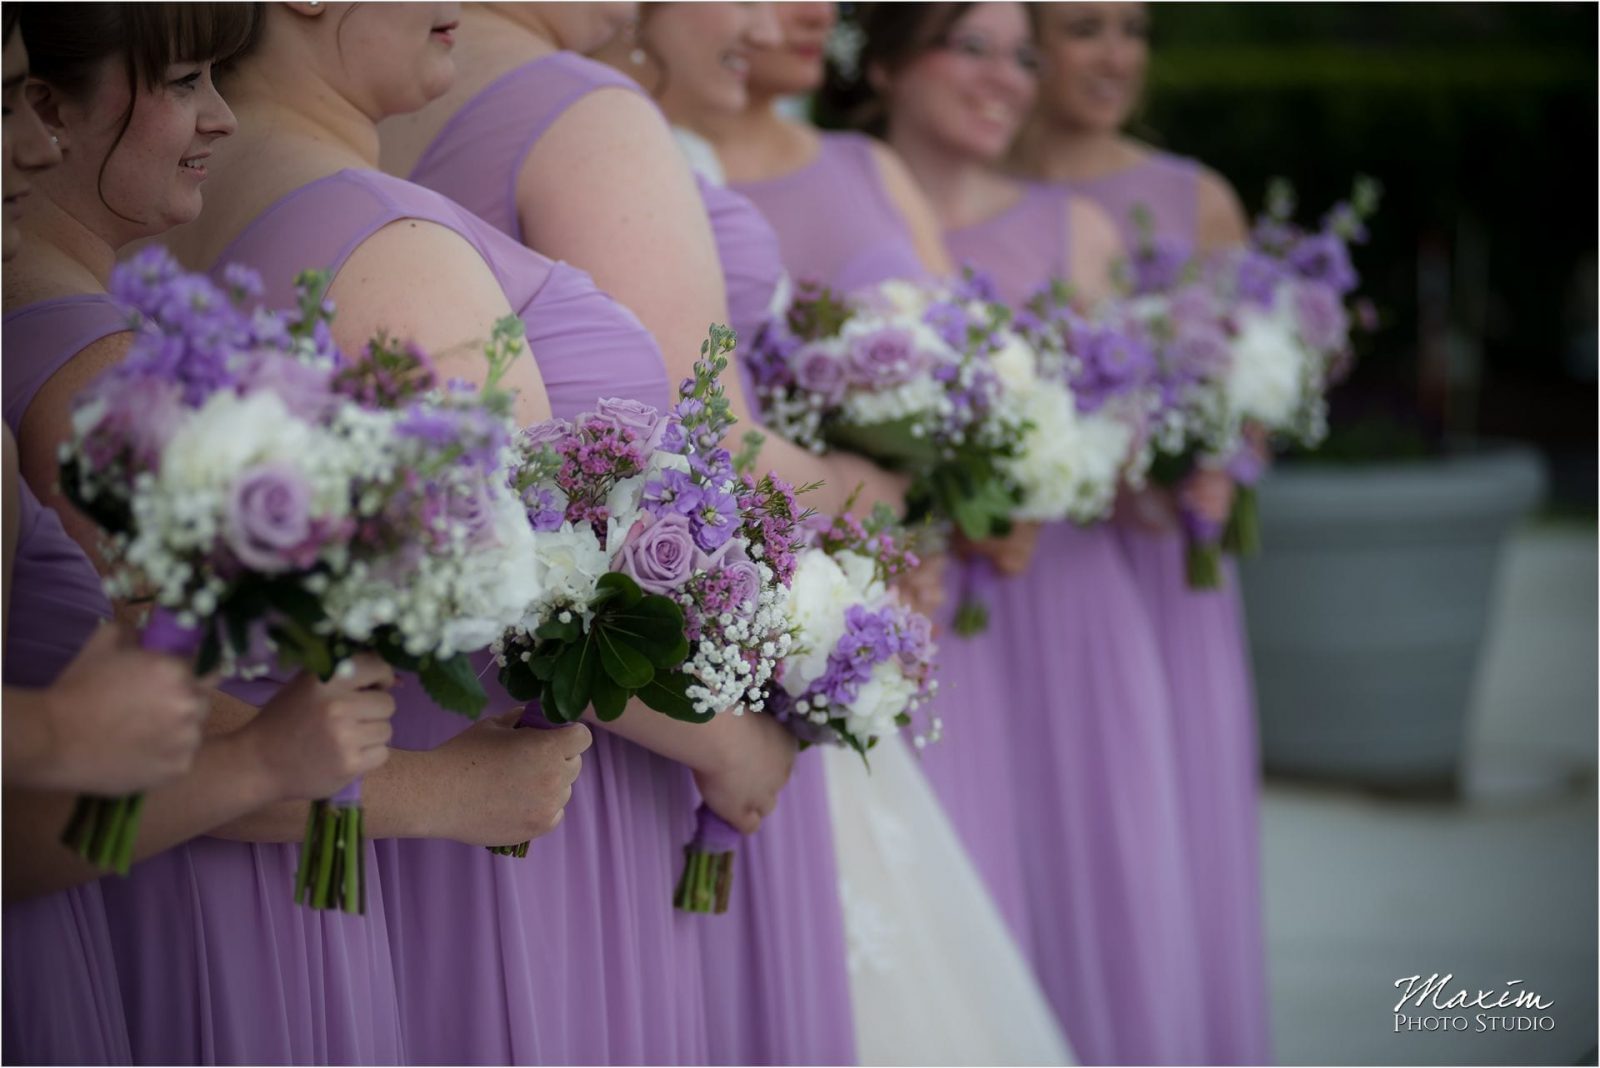 Anderson Hills UMC, Cincinnati Wedding Photography, Bride preparations, Purple dresses, Bridesmaids